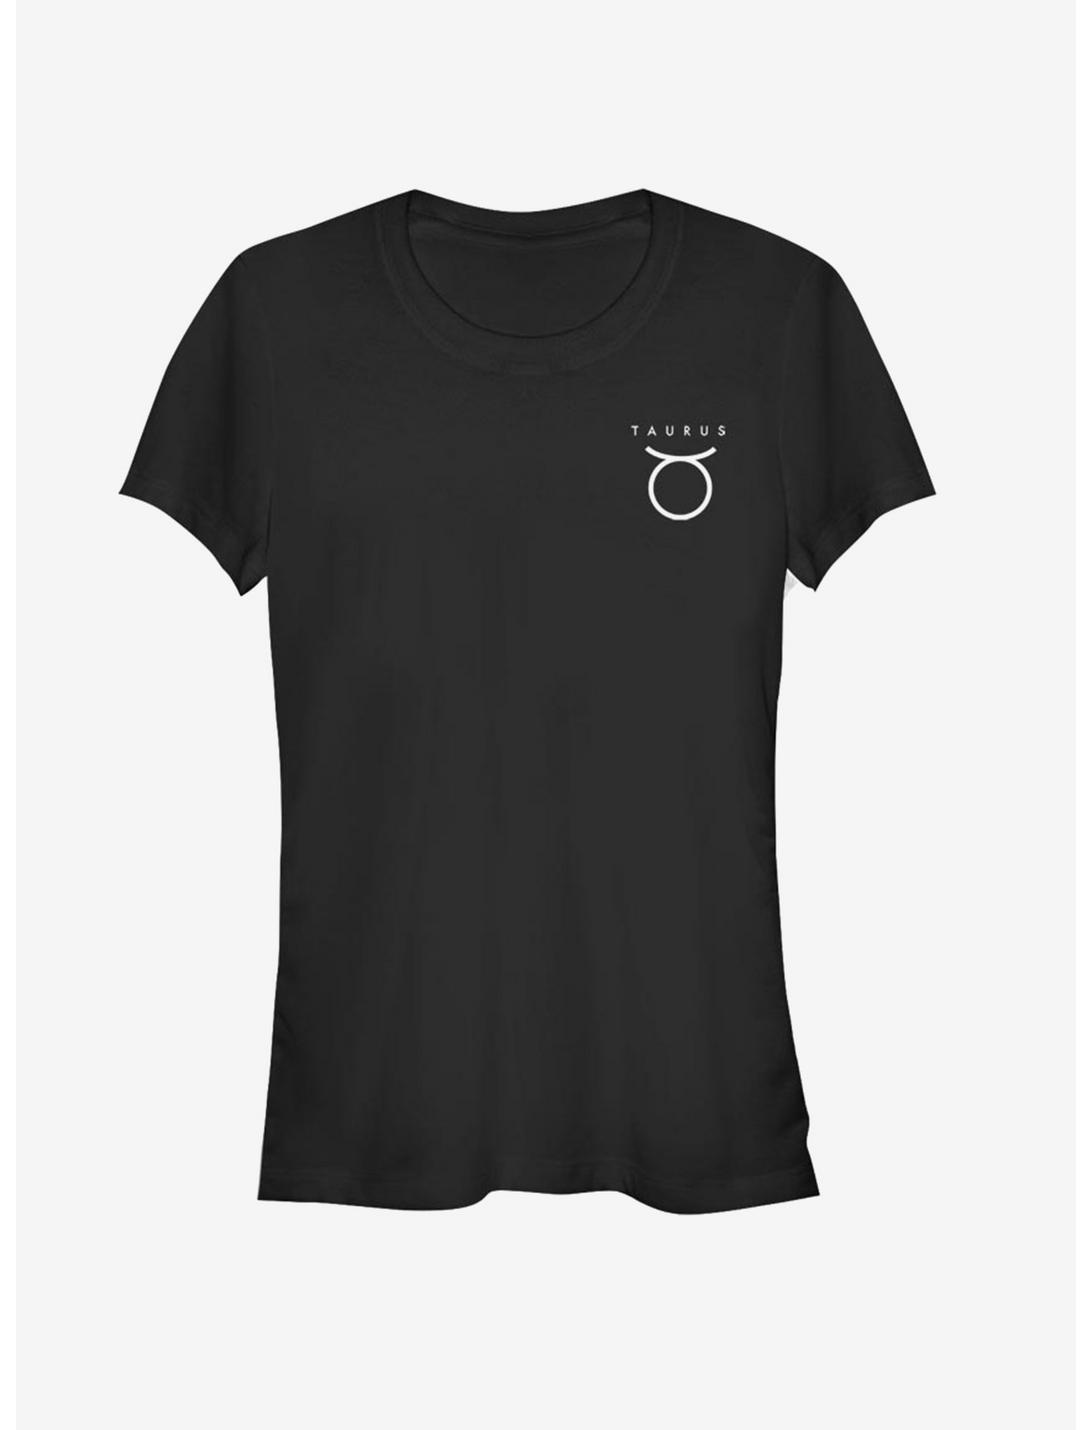 Taurus Astrology Sign Girls T-Shirt, BLACK, hi-res